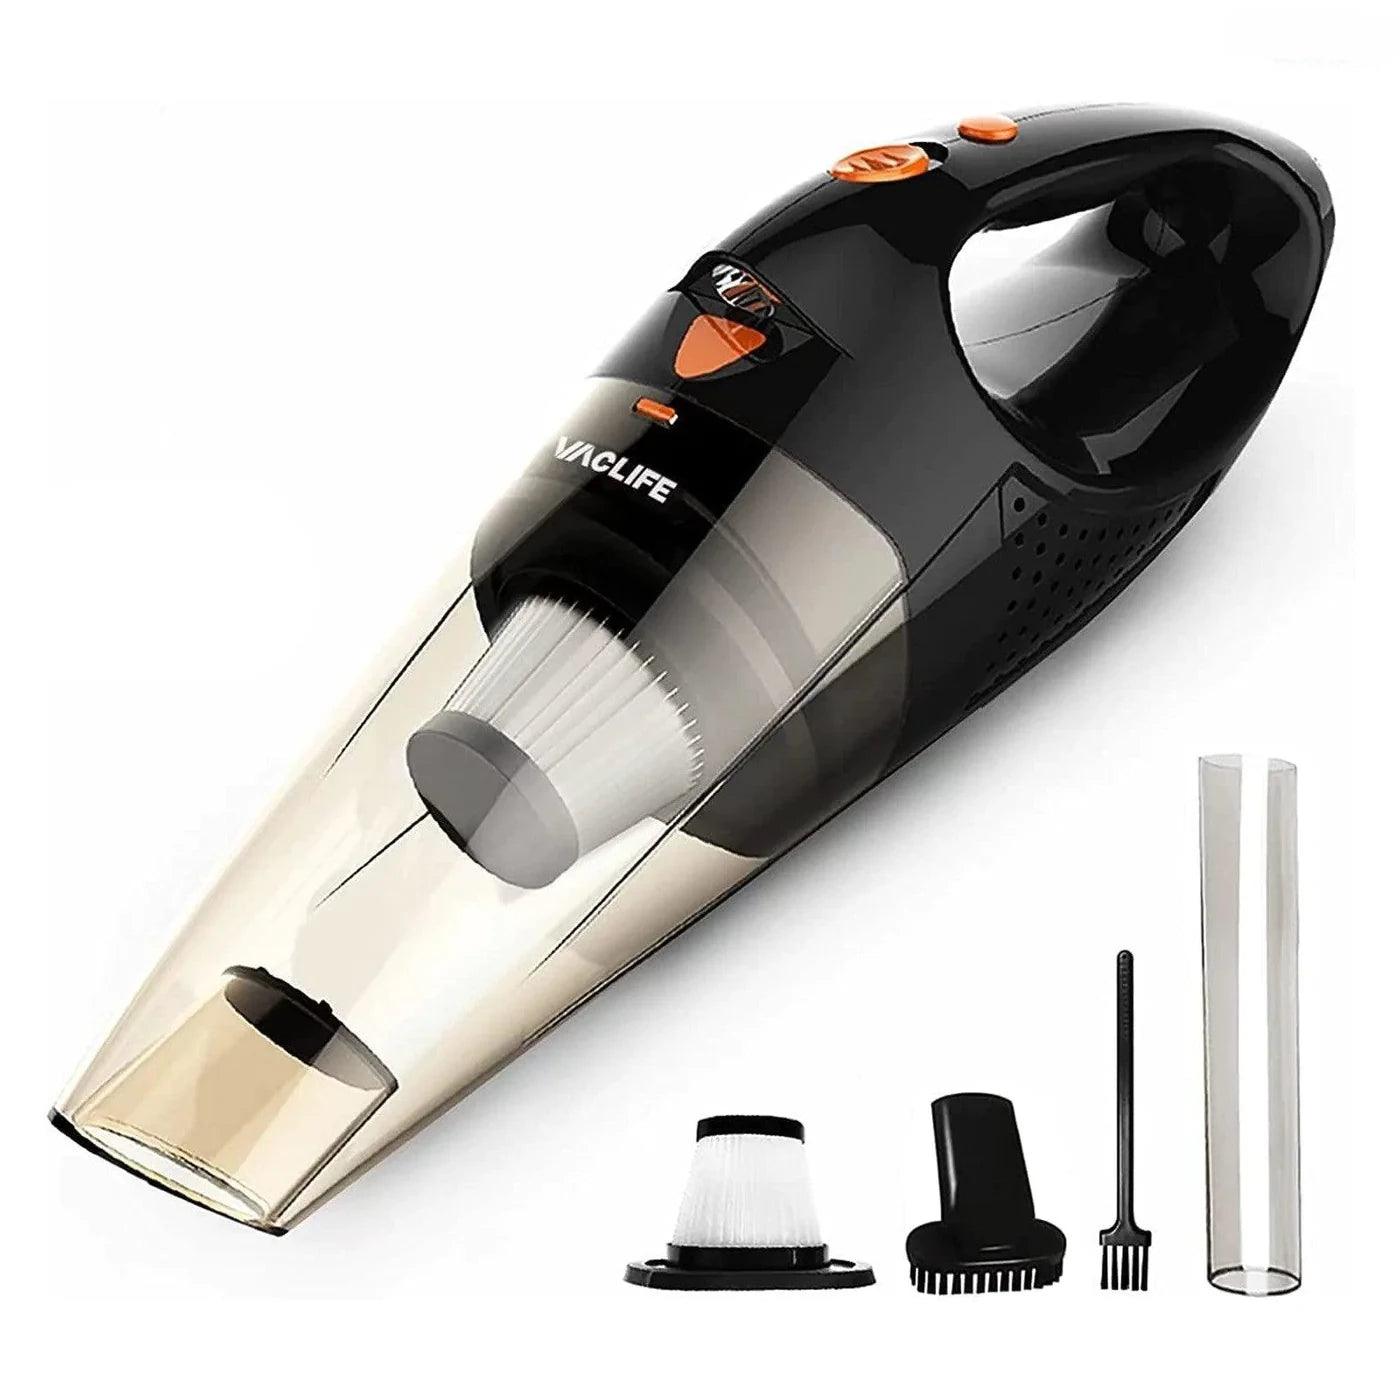 VacLife Handheld Car Vacuum Cleaner VL189 Cordless Car Hoover - Massive Discounts